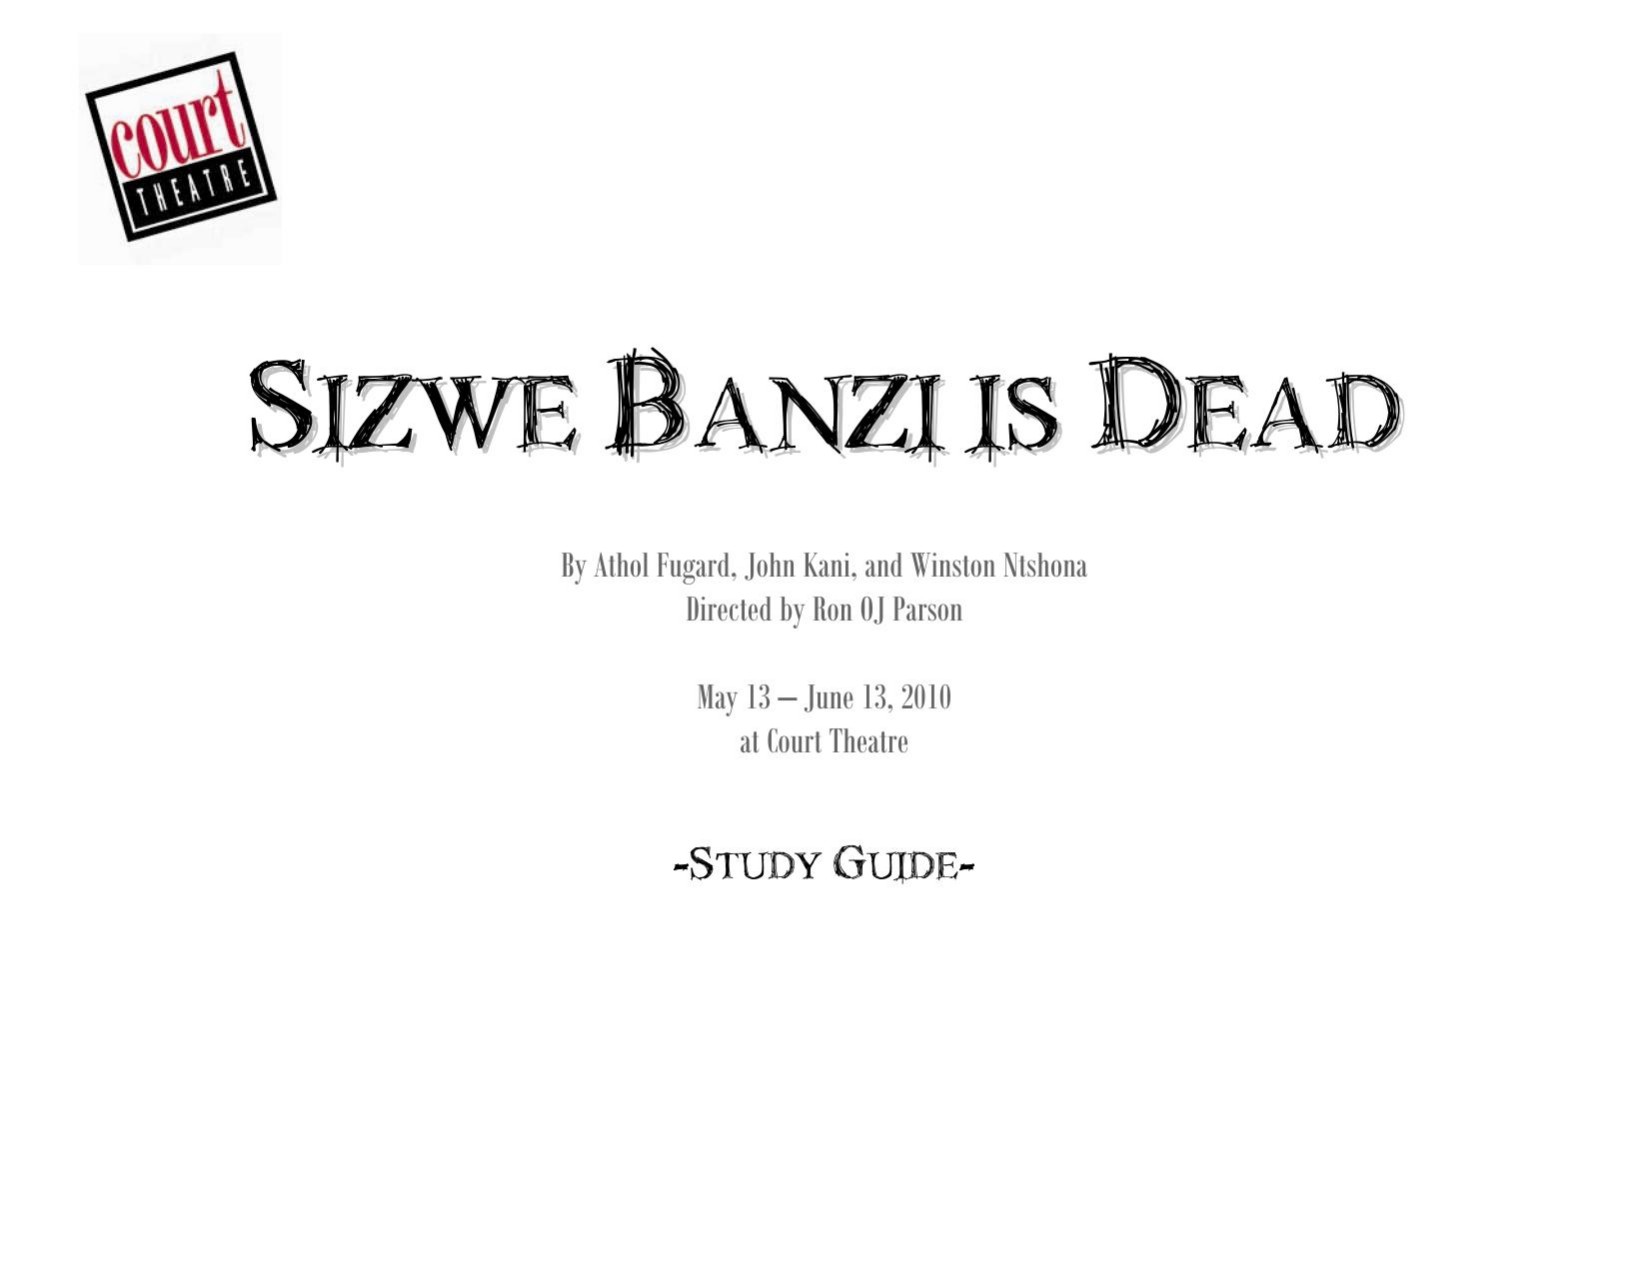 Microsoft Word - Sizwe Banzi is Dead Study Guide.docx